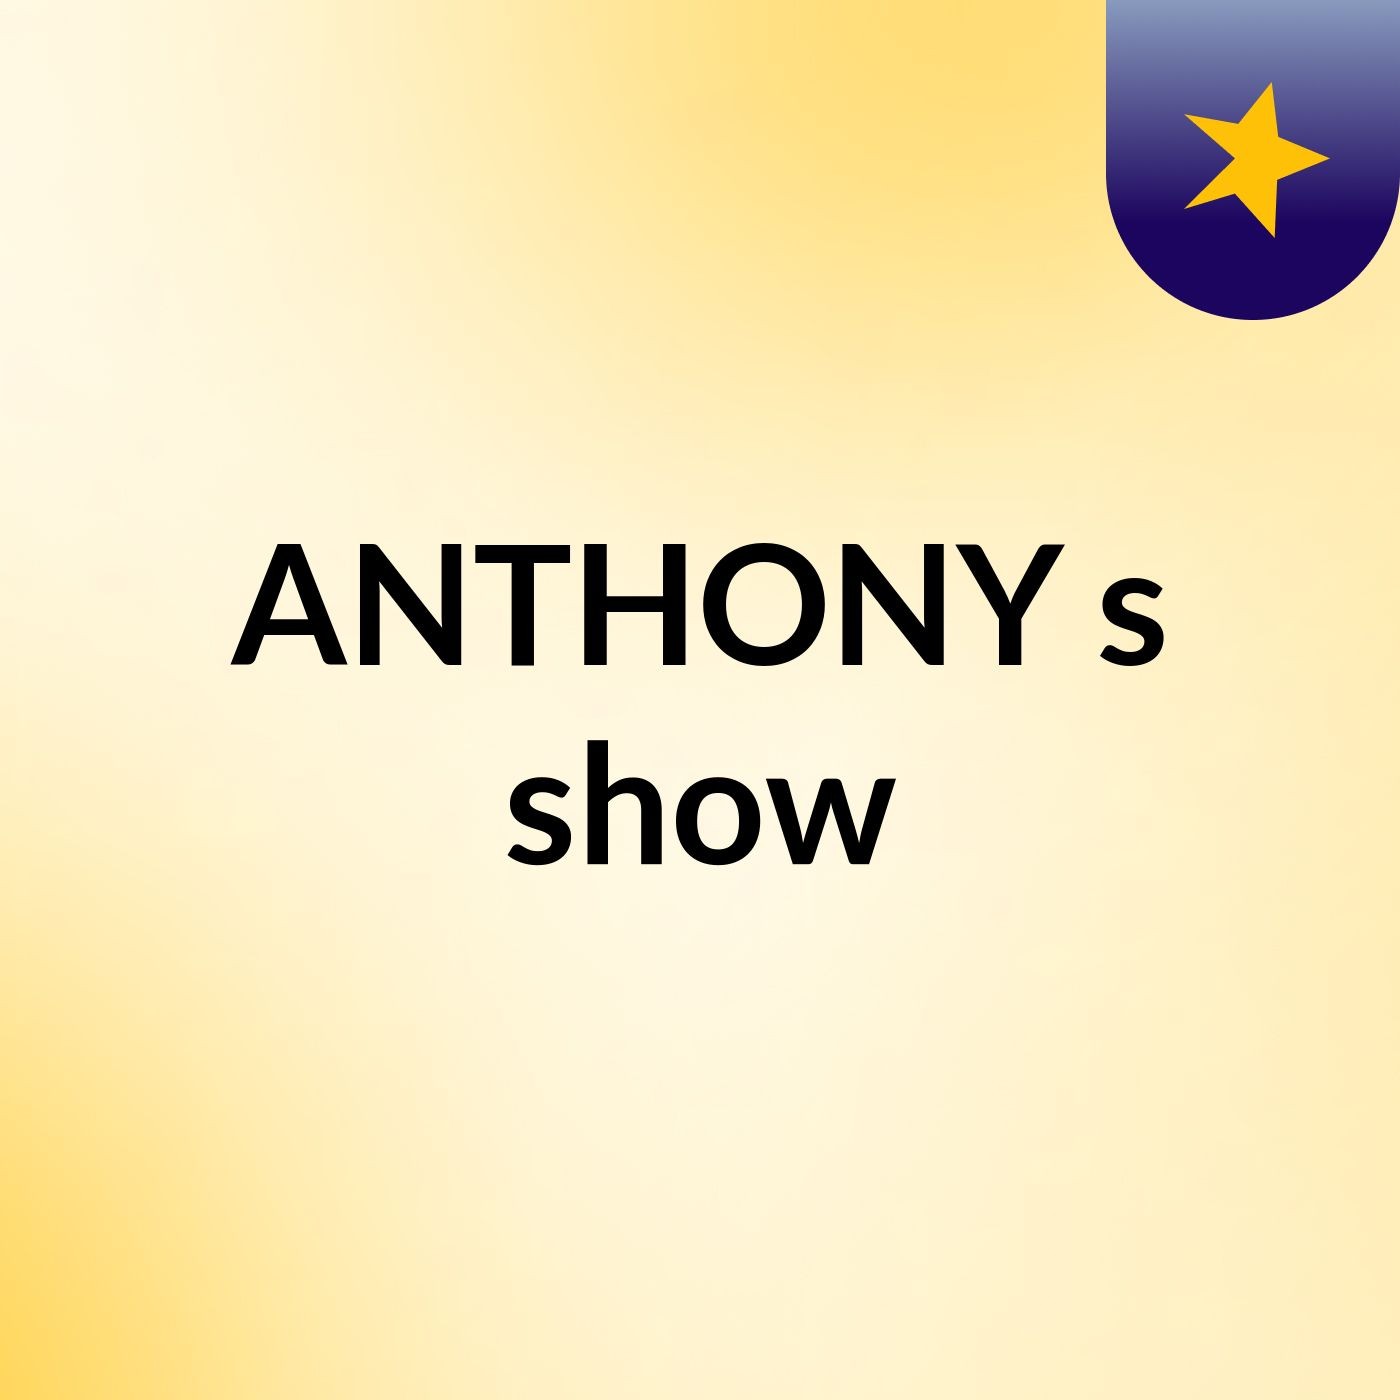 ANTHONY's show